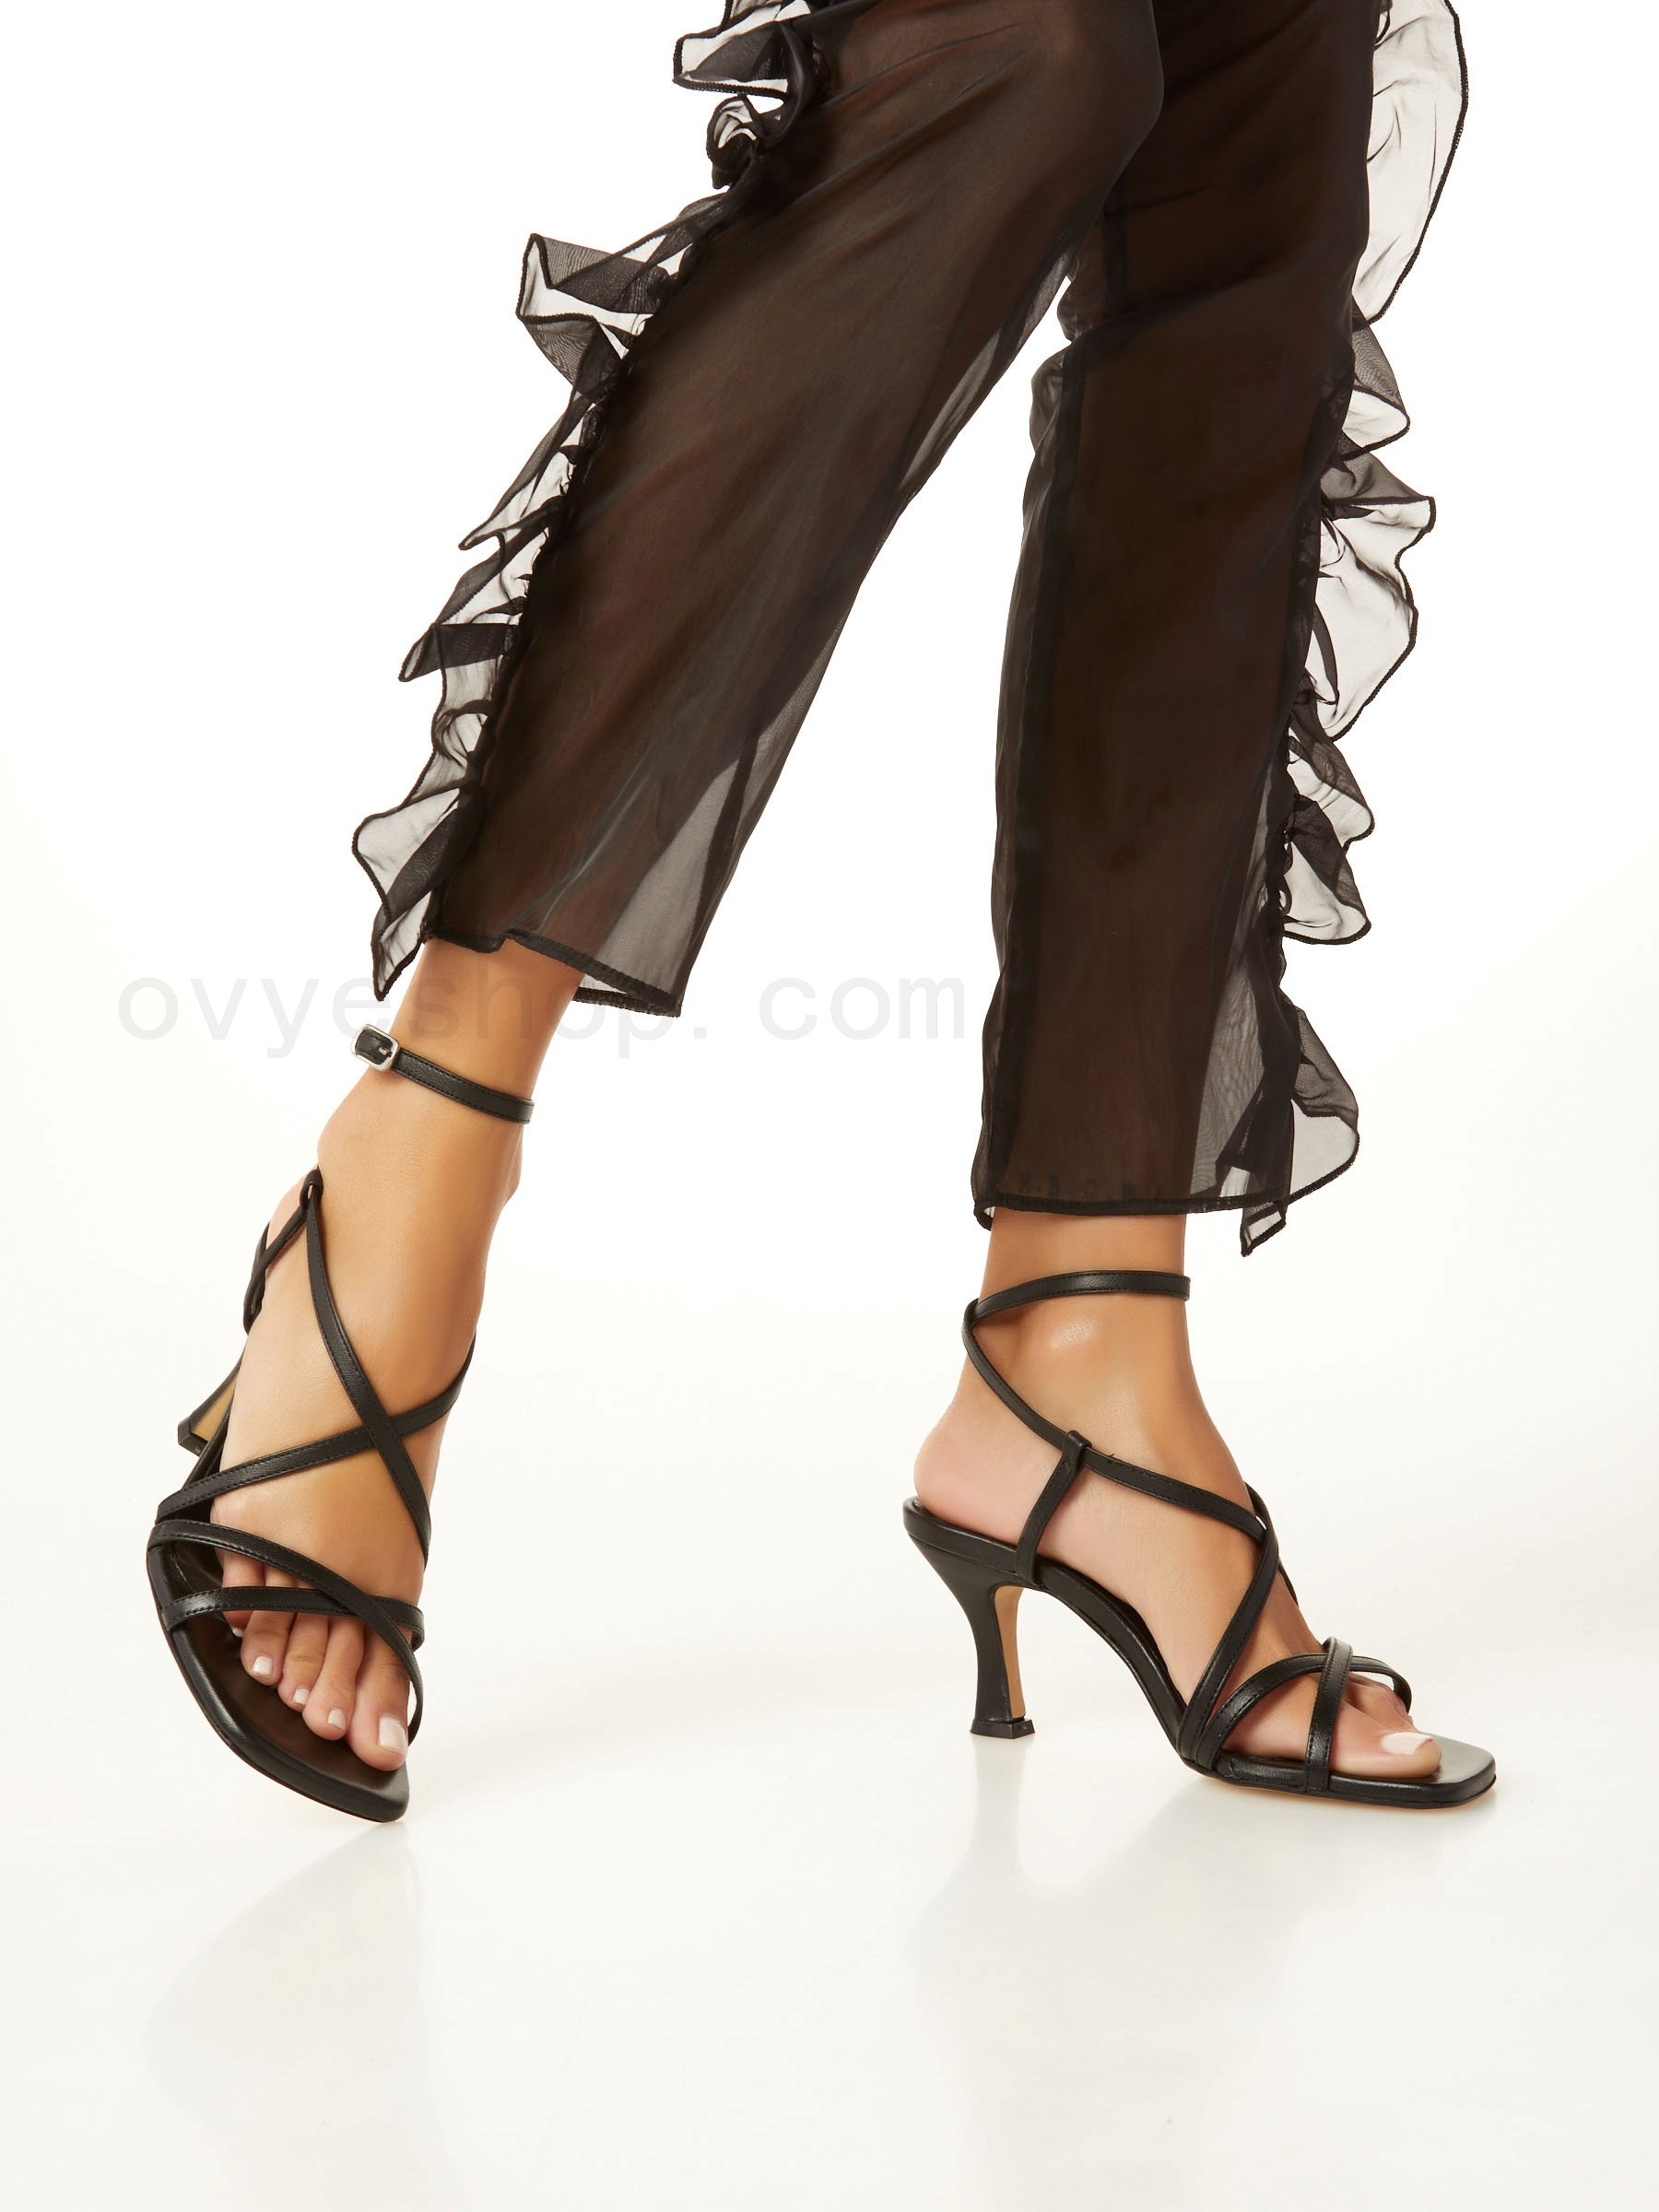 ovy&#232; shop Leather Heel Sandal F0817885-0582 Sale